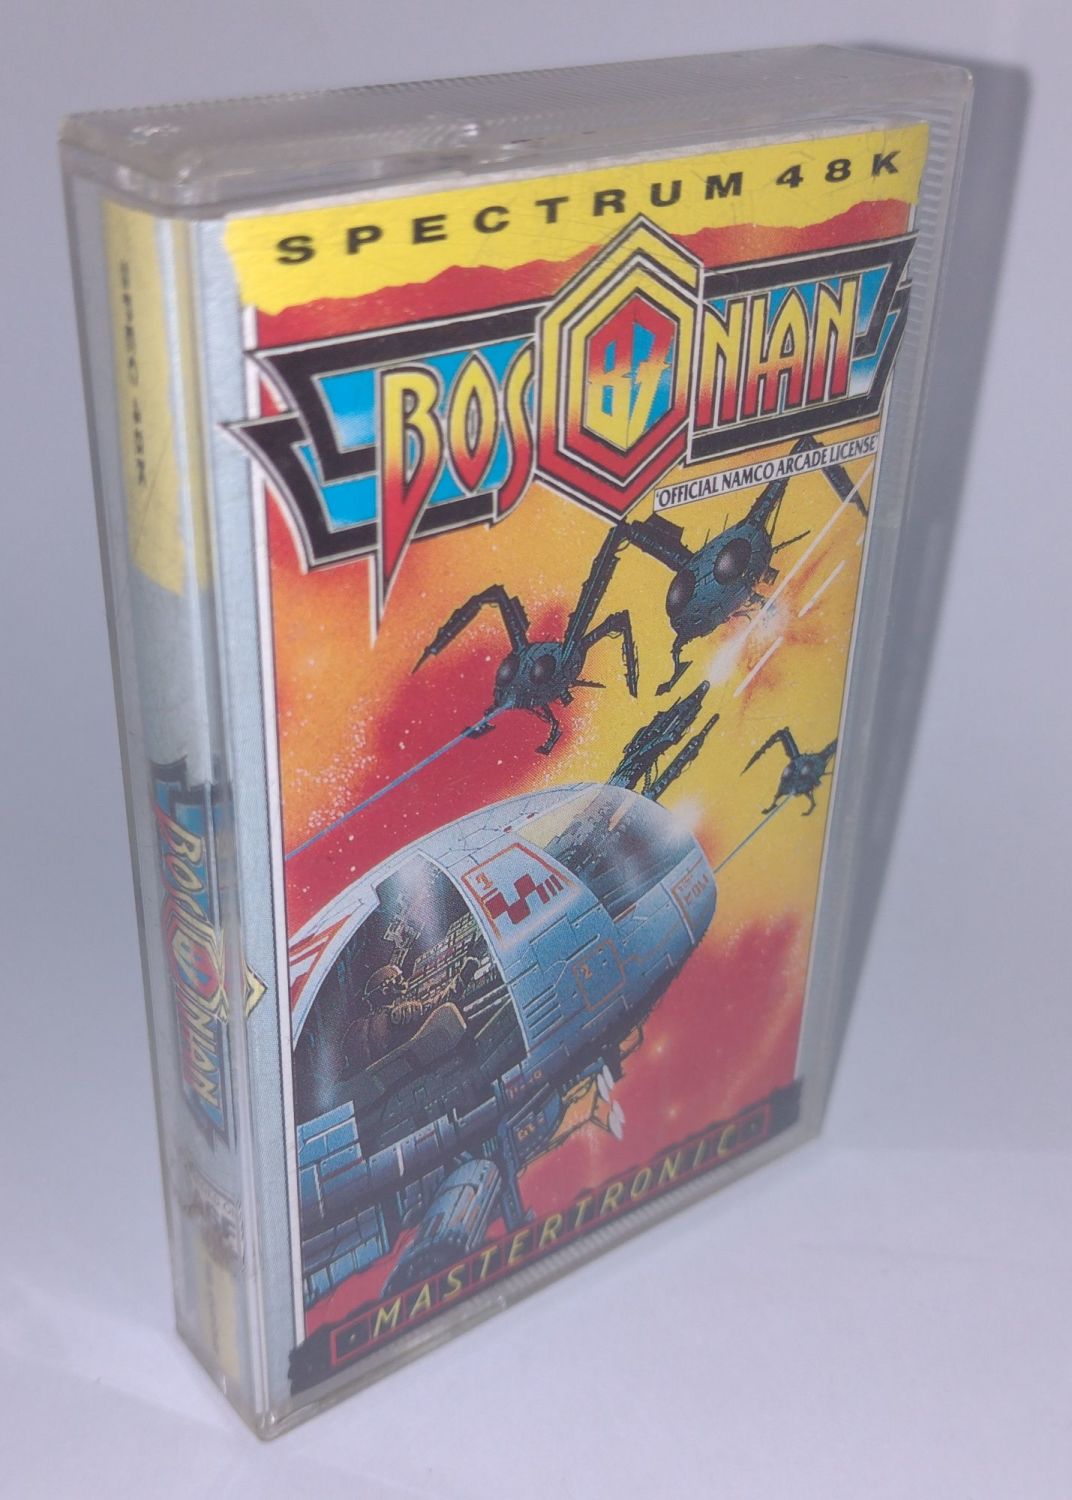 Bosconian - Mastertronic - Vintage ZX Spectrum 48K 128K +2 Software - Teste